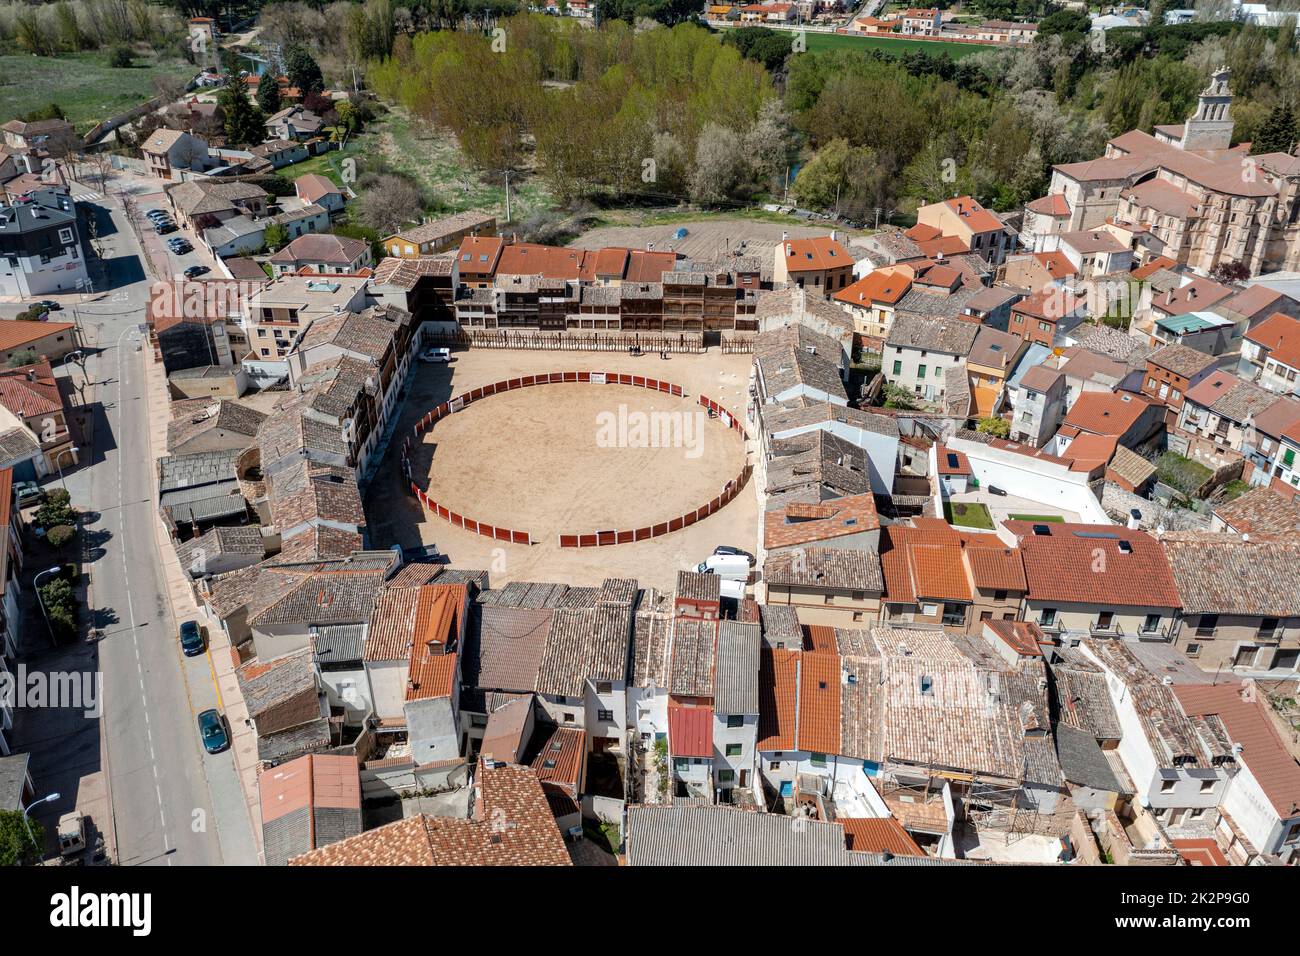 Bullfighting ring in the city of Penafiel, Spain Stock Photo